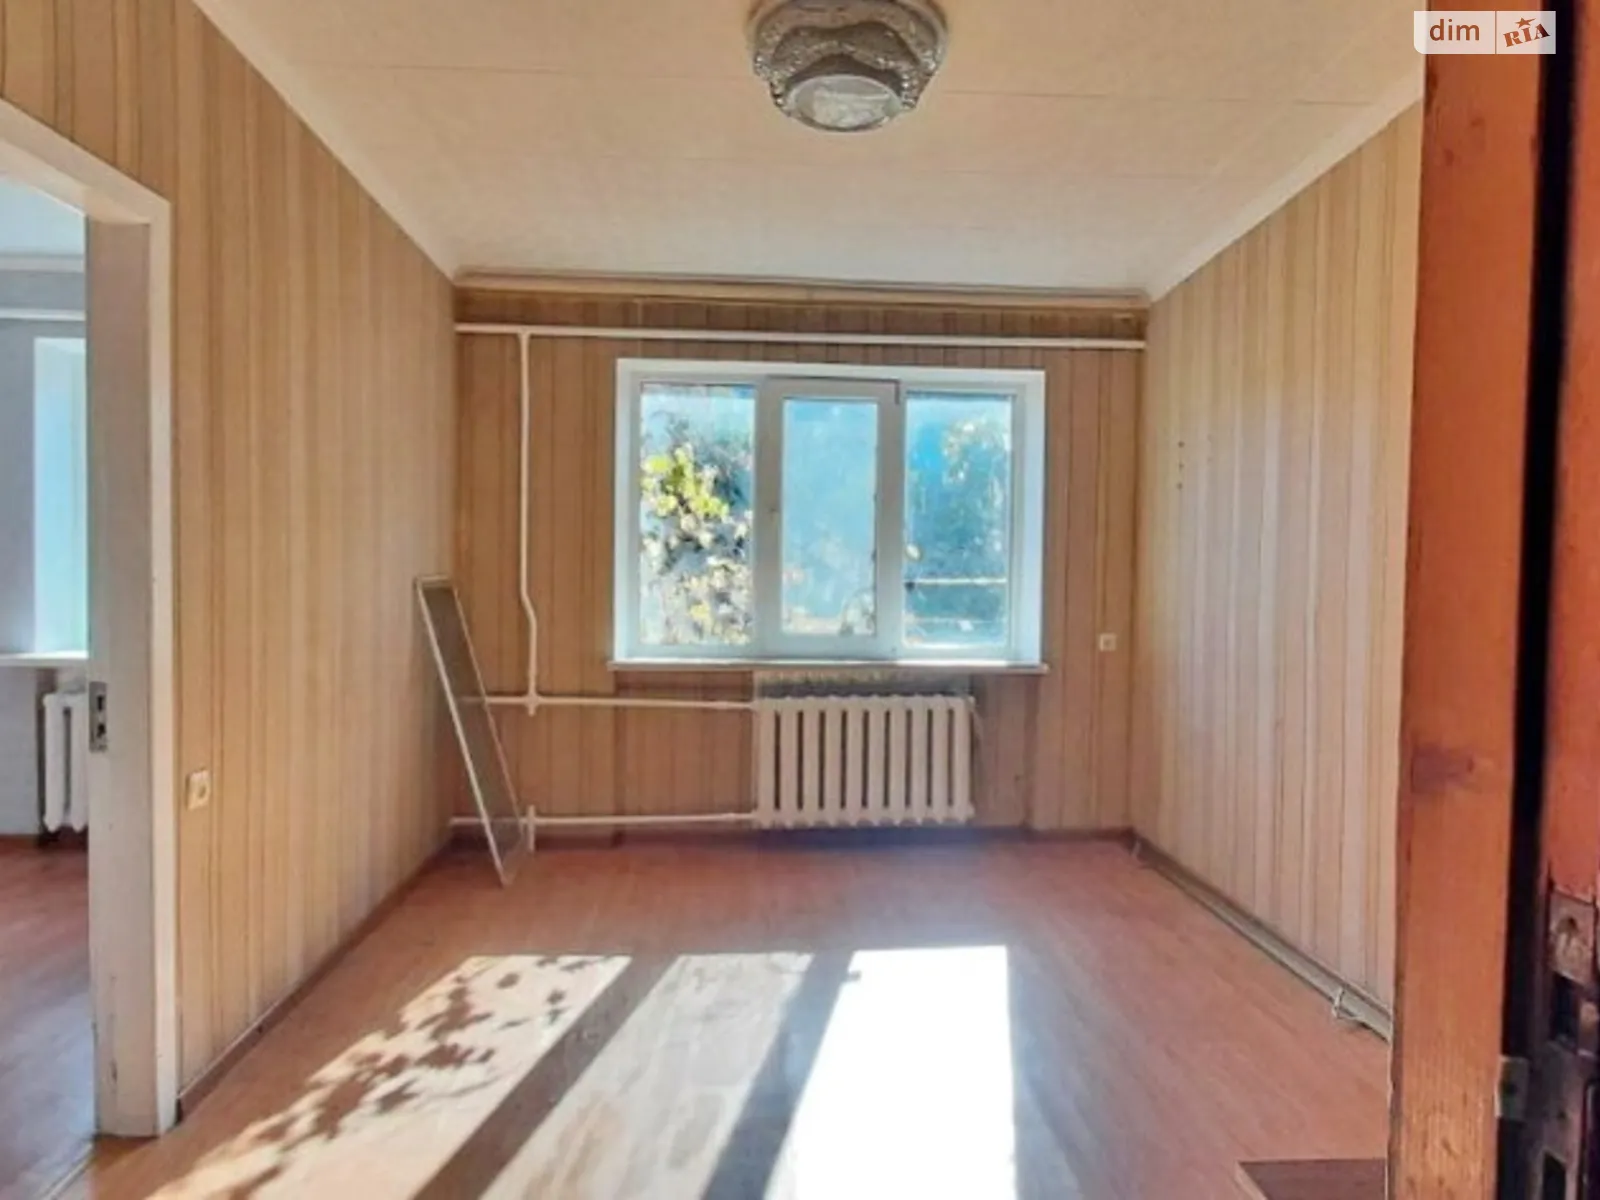 Продается комната 34 кв. м в Одессе, цена: 18500 $ - фото 1